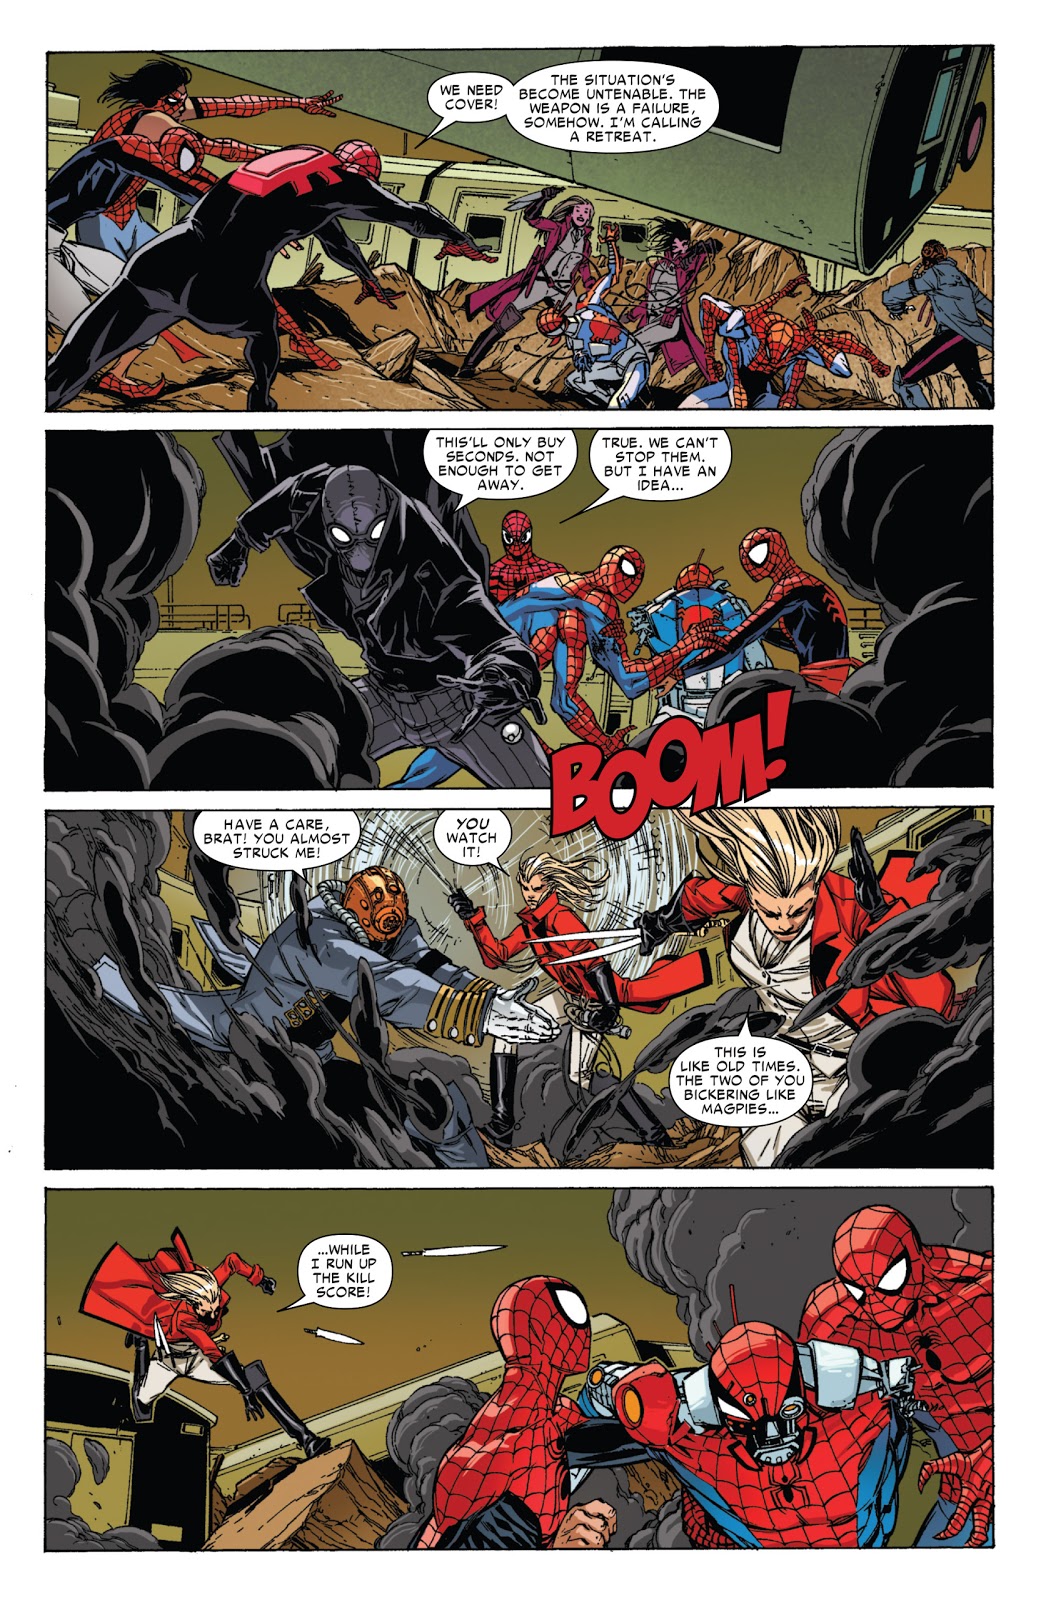 Spider-Army VS Karn, Brix And Bora